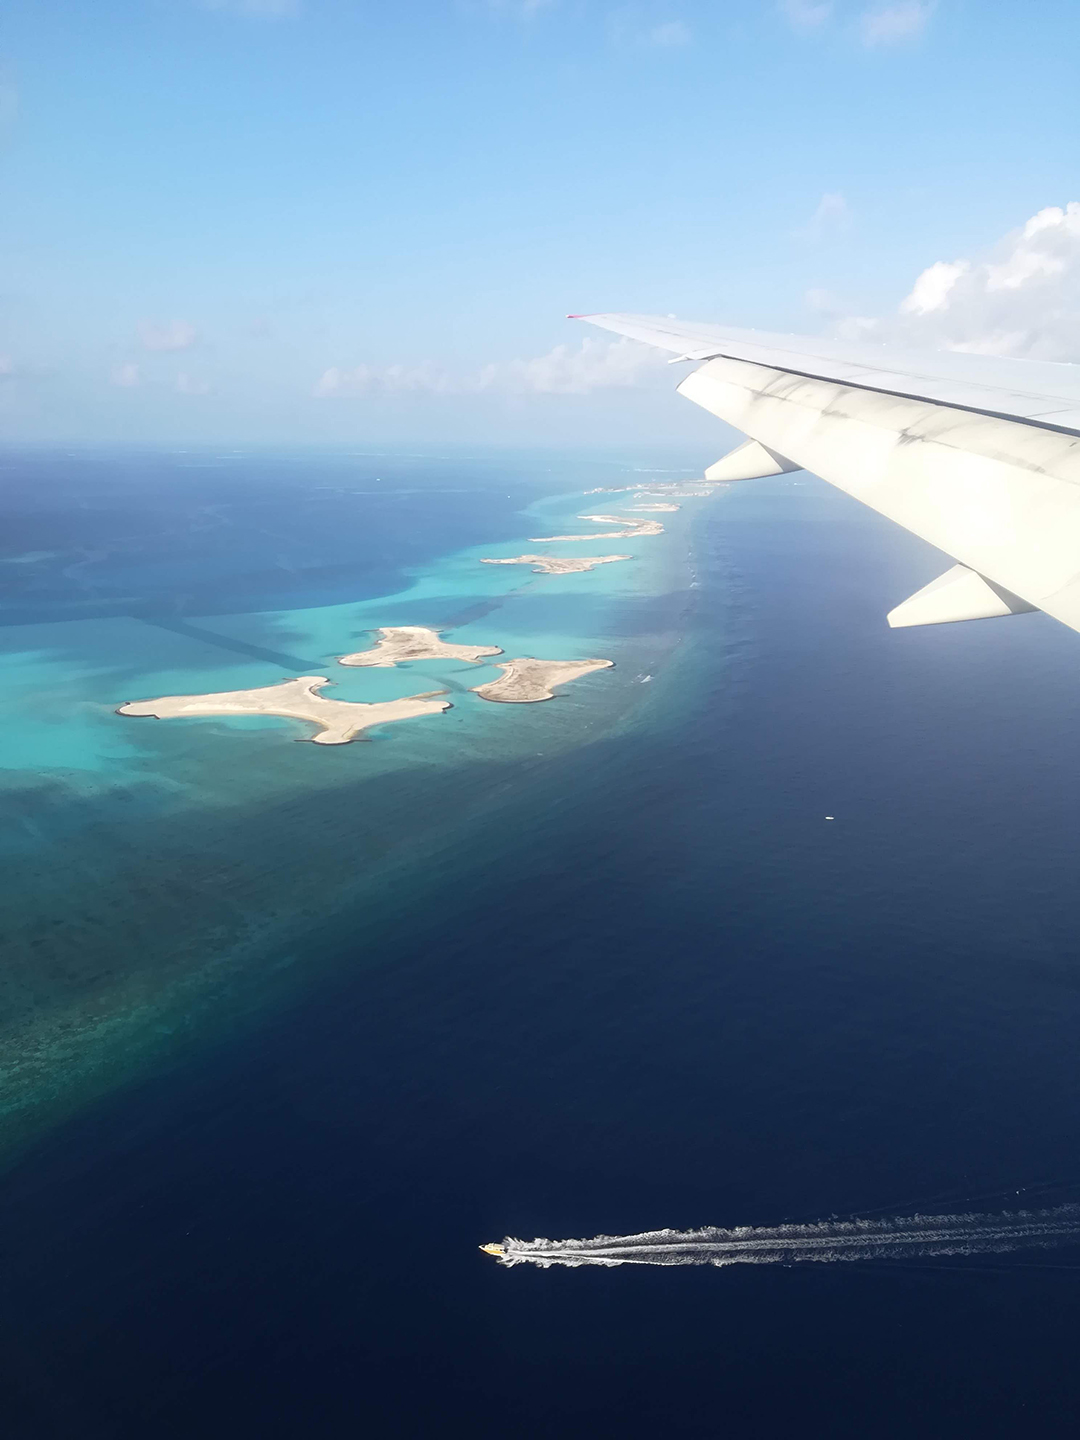 Potovanje_na_Maldive_-_Travelling_to_the_Maldives_13.jpg